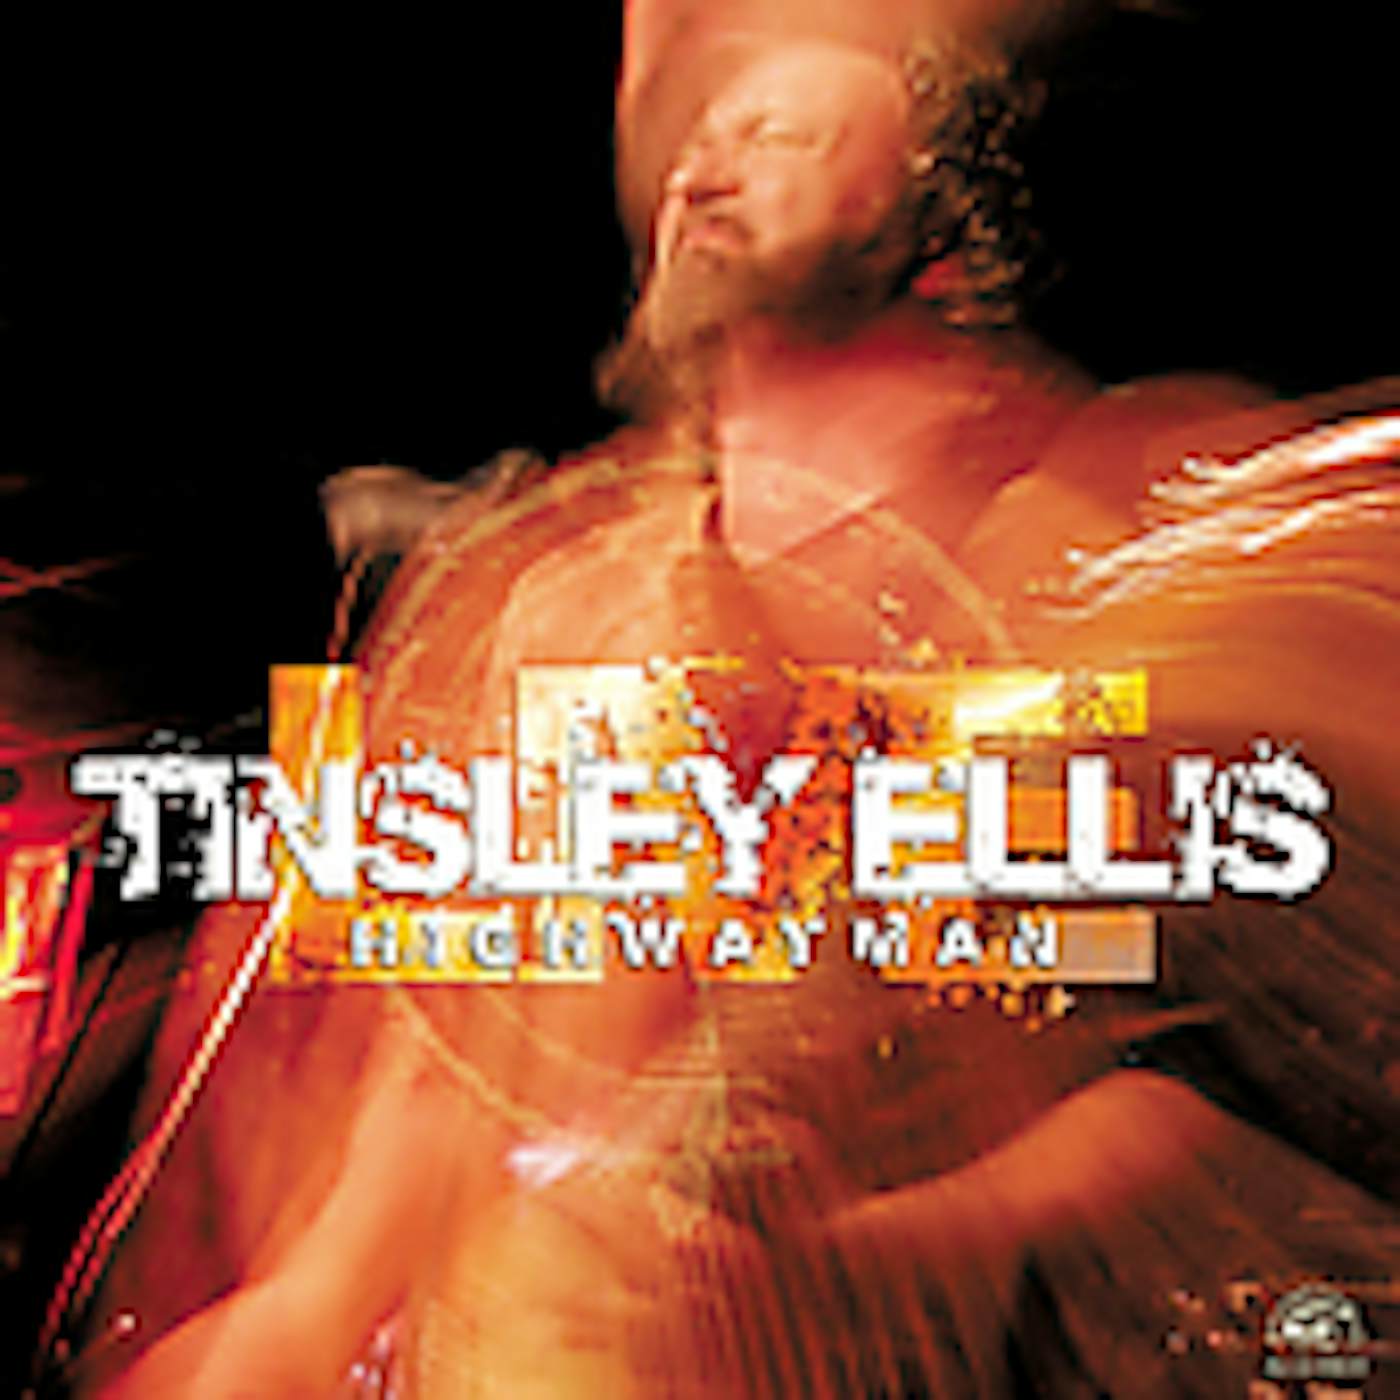 Tinsley Ellis LIVE HIGHWAYMAN CD